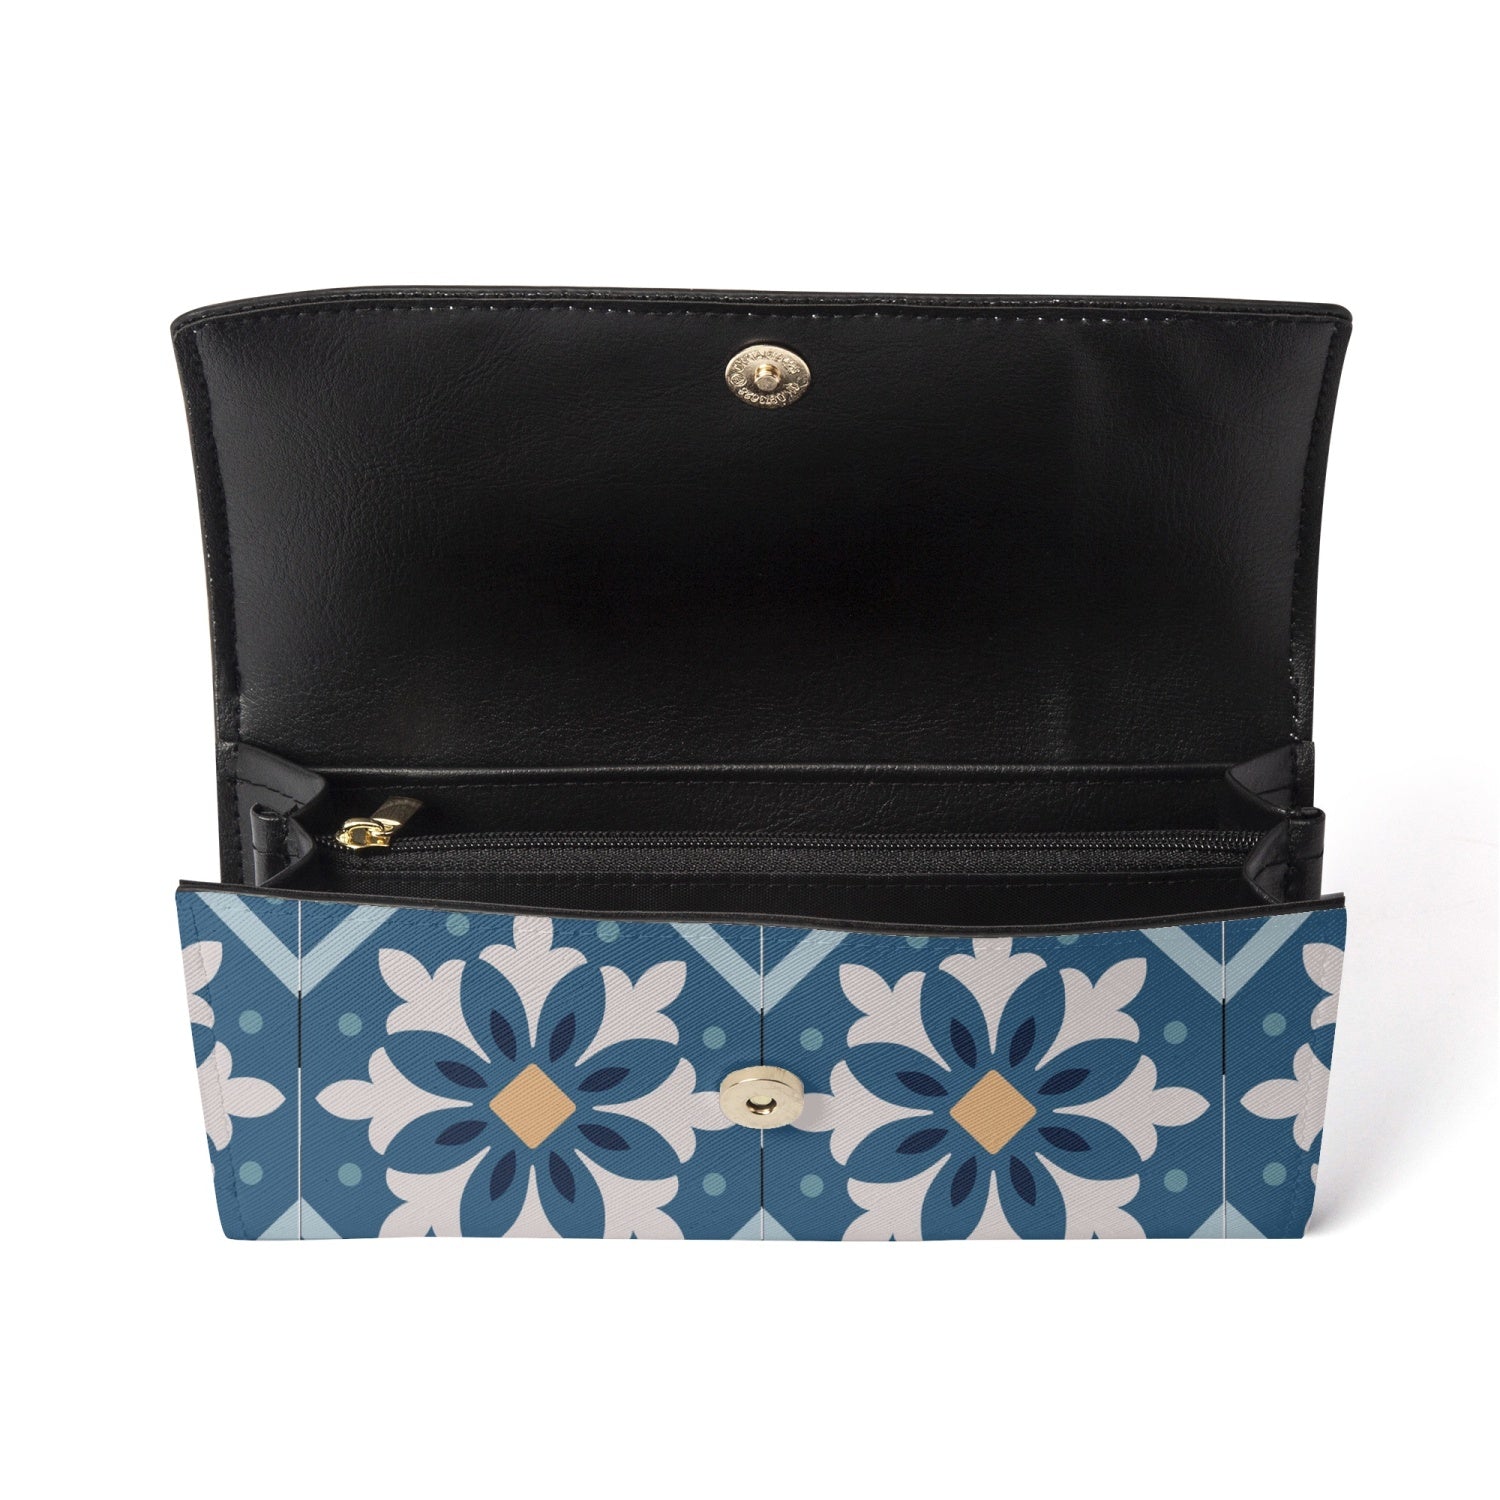 Mosaic Design Clutch Handbag open